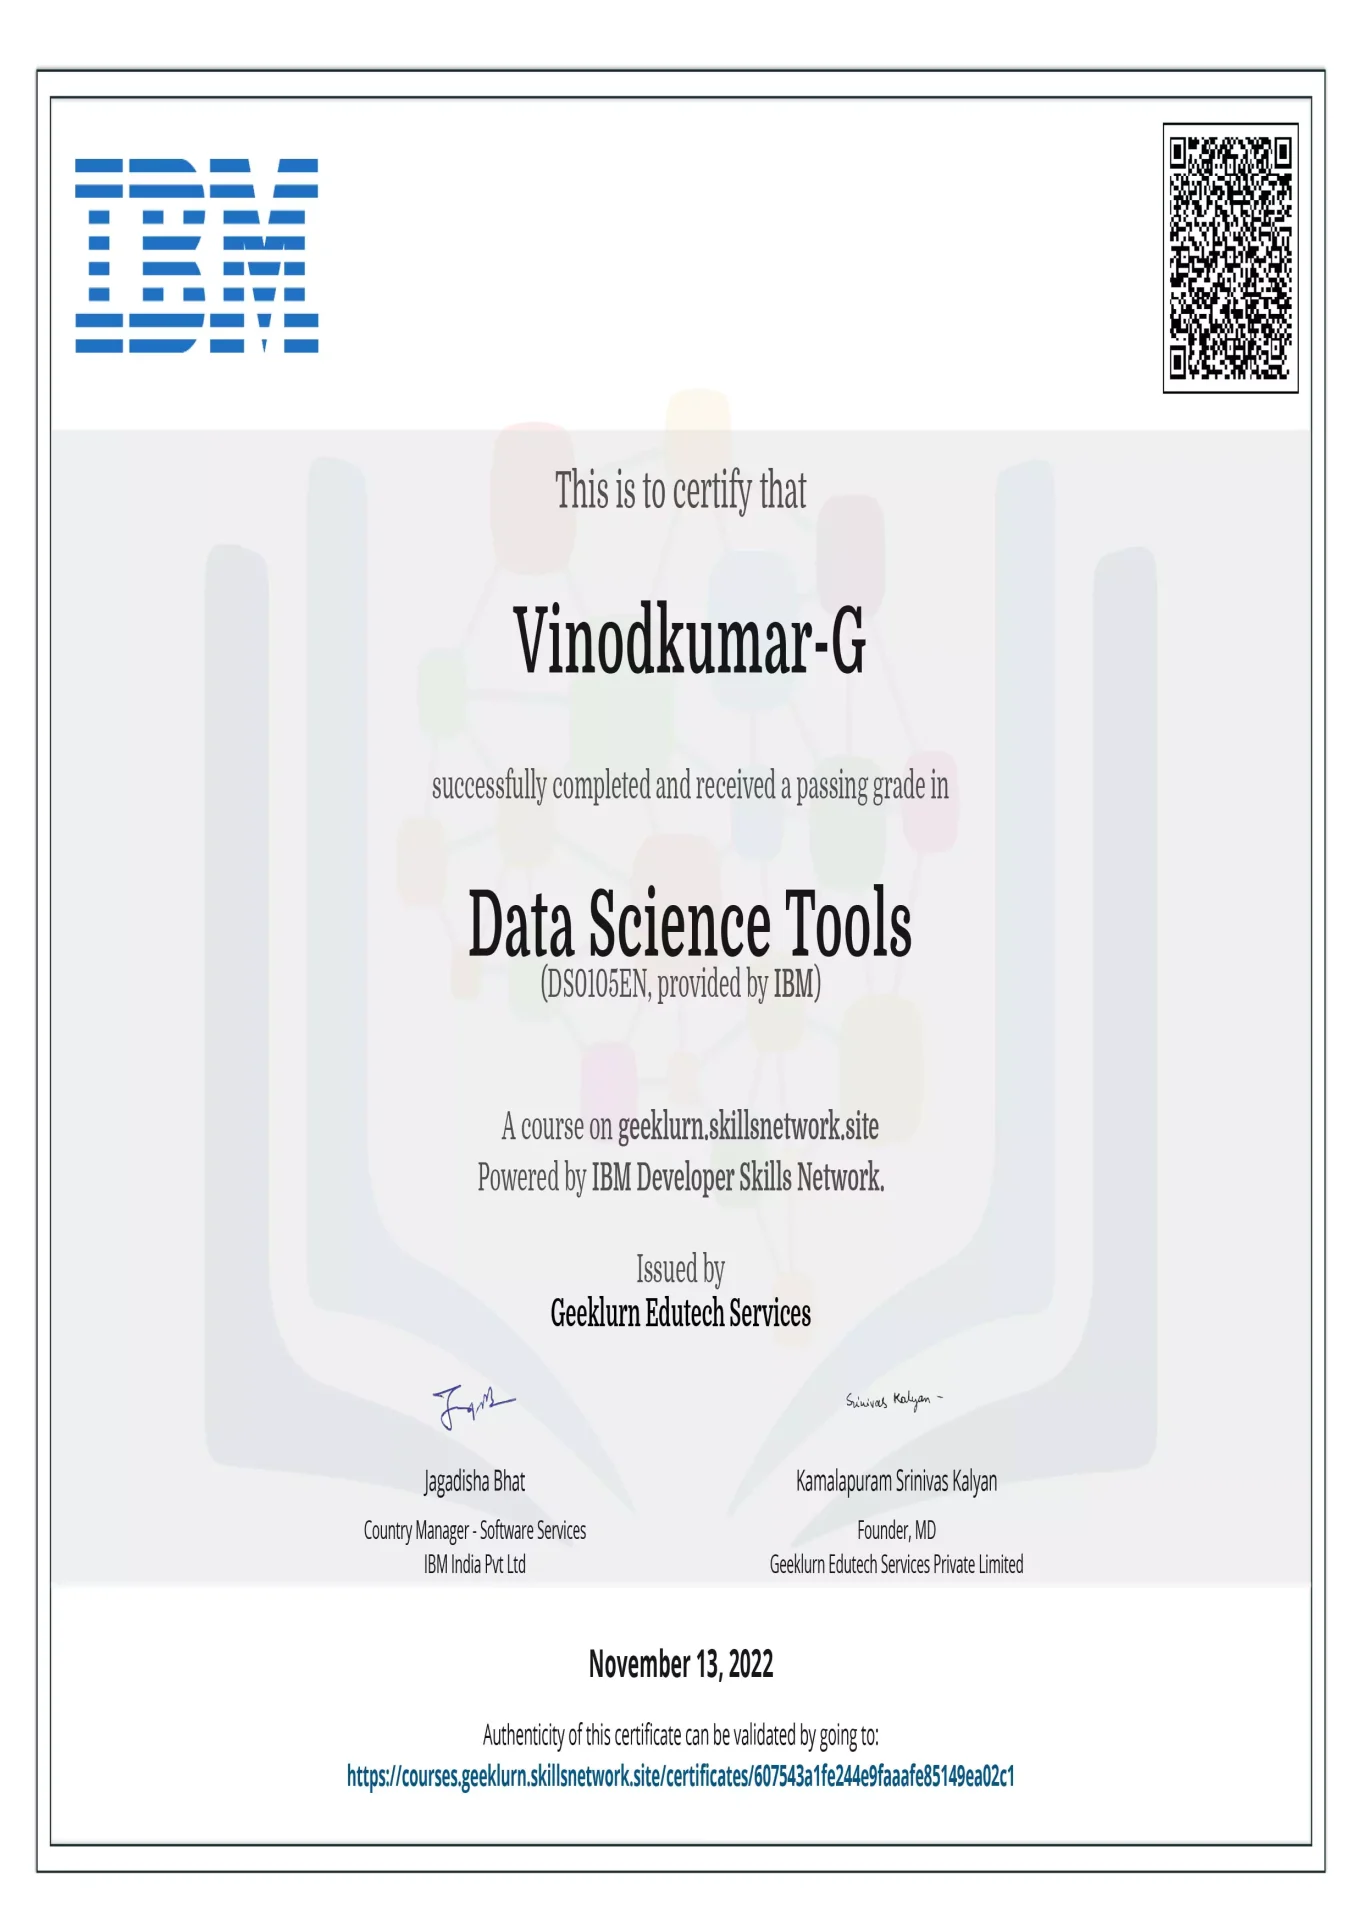 ibm-ds0105en-certificate-geeklurn-edutech-services-data-science-tools